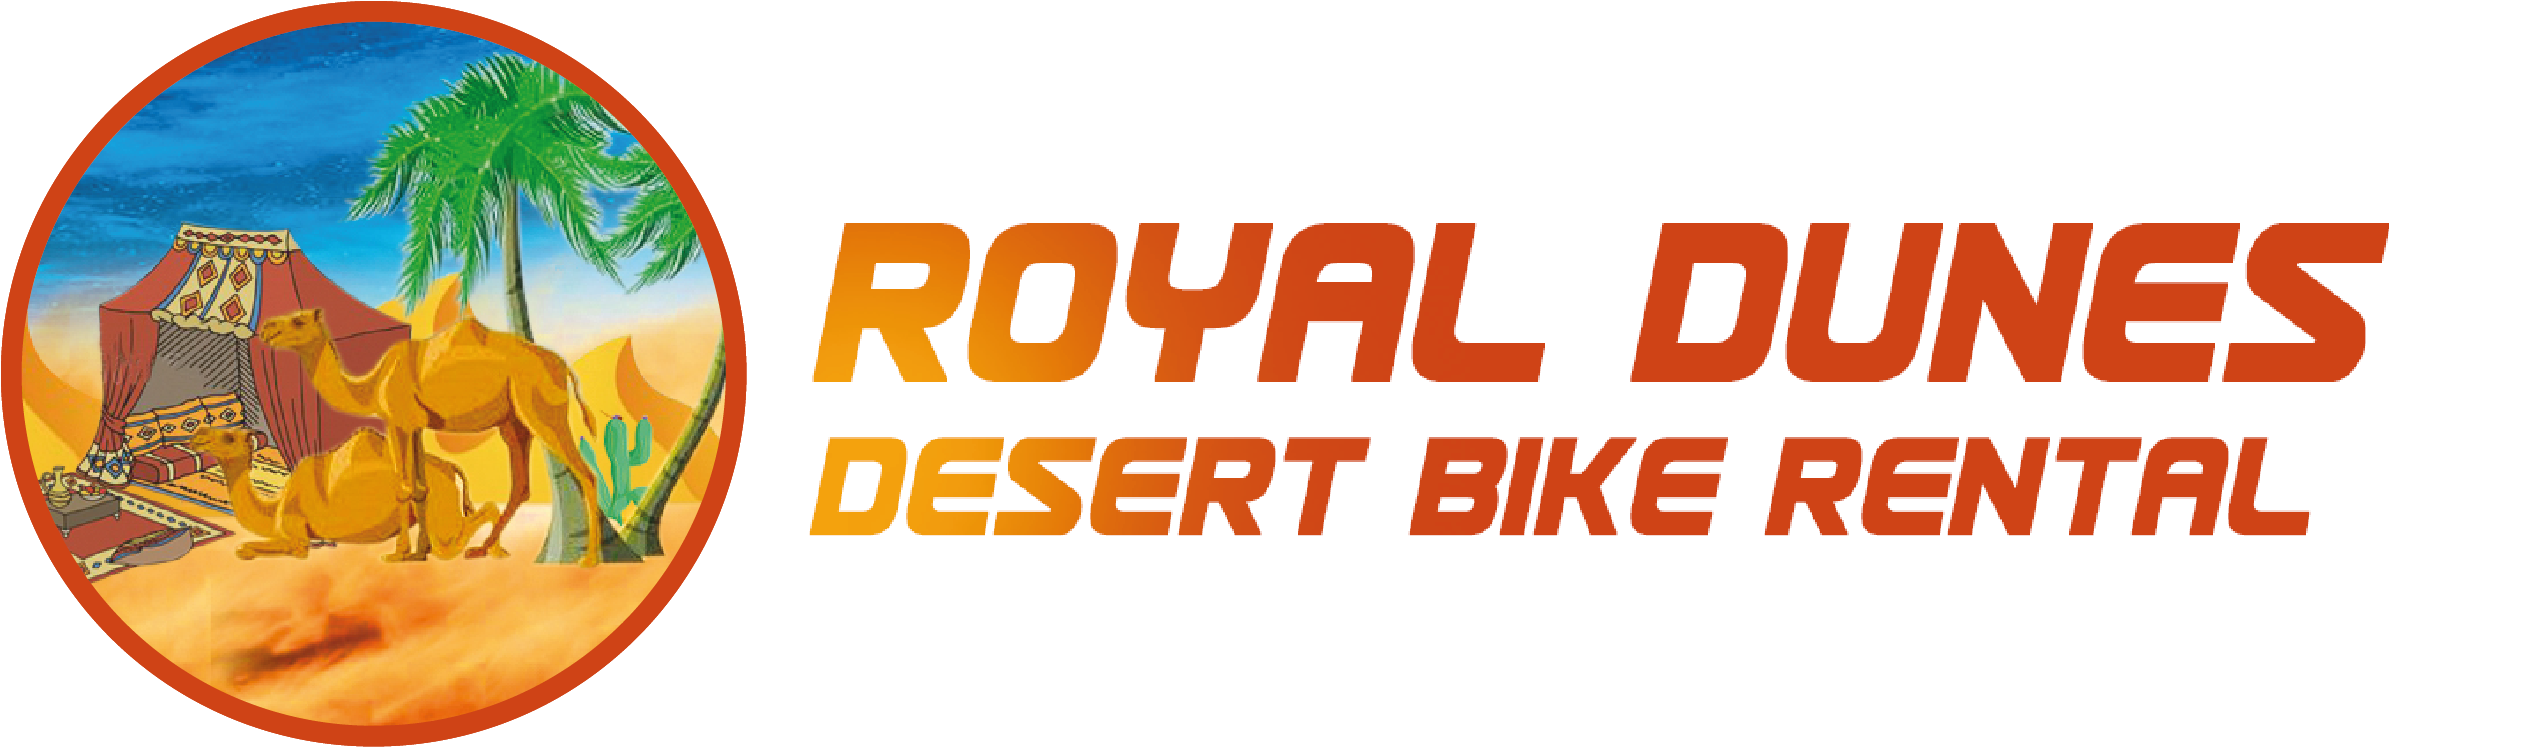 Royal Dunes Desert Bike Rental